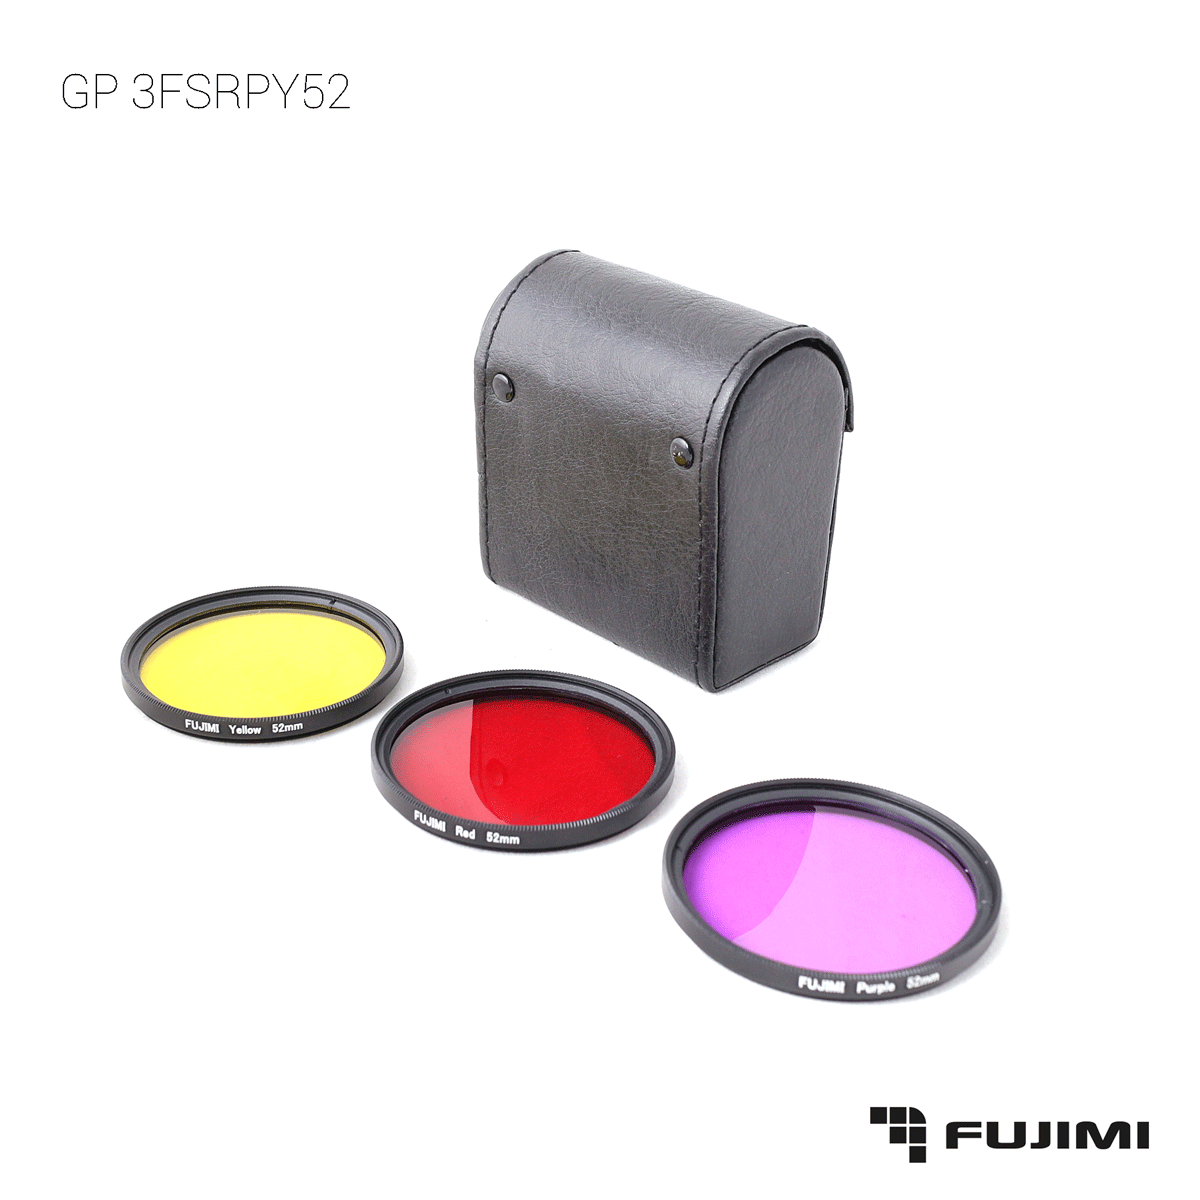 Набор из 3-х типов фильтров для камеры HERO3+/4 (FUJIMI GP 3FSRPY52) + Рамка-адаптер 52 мм